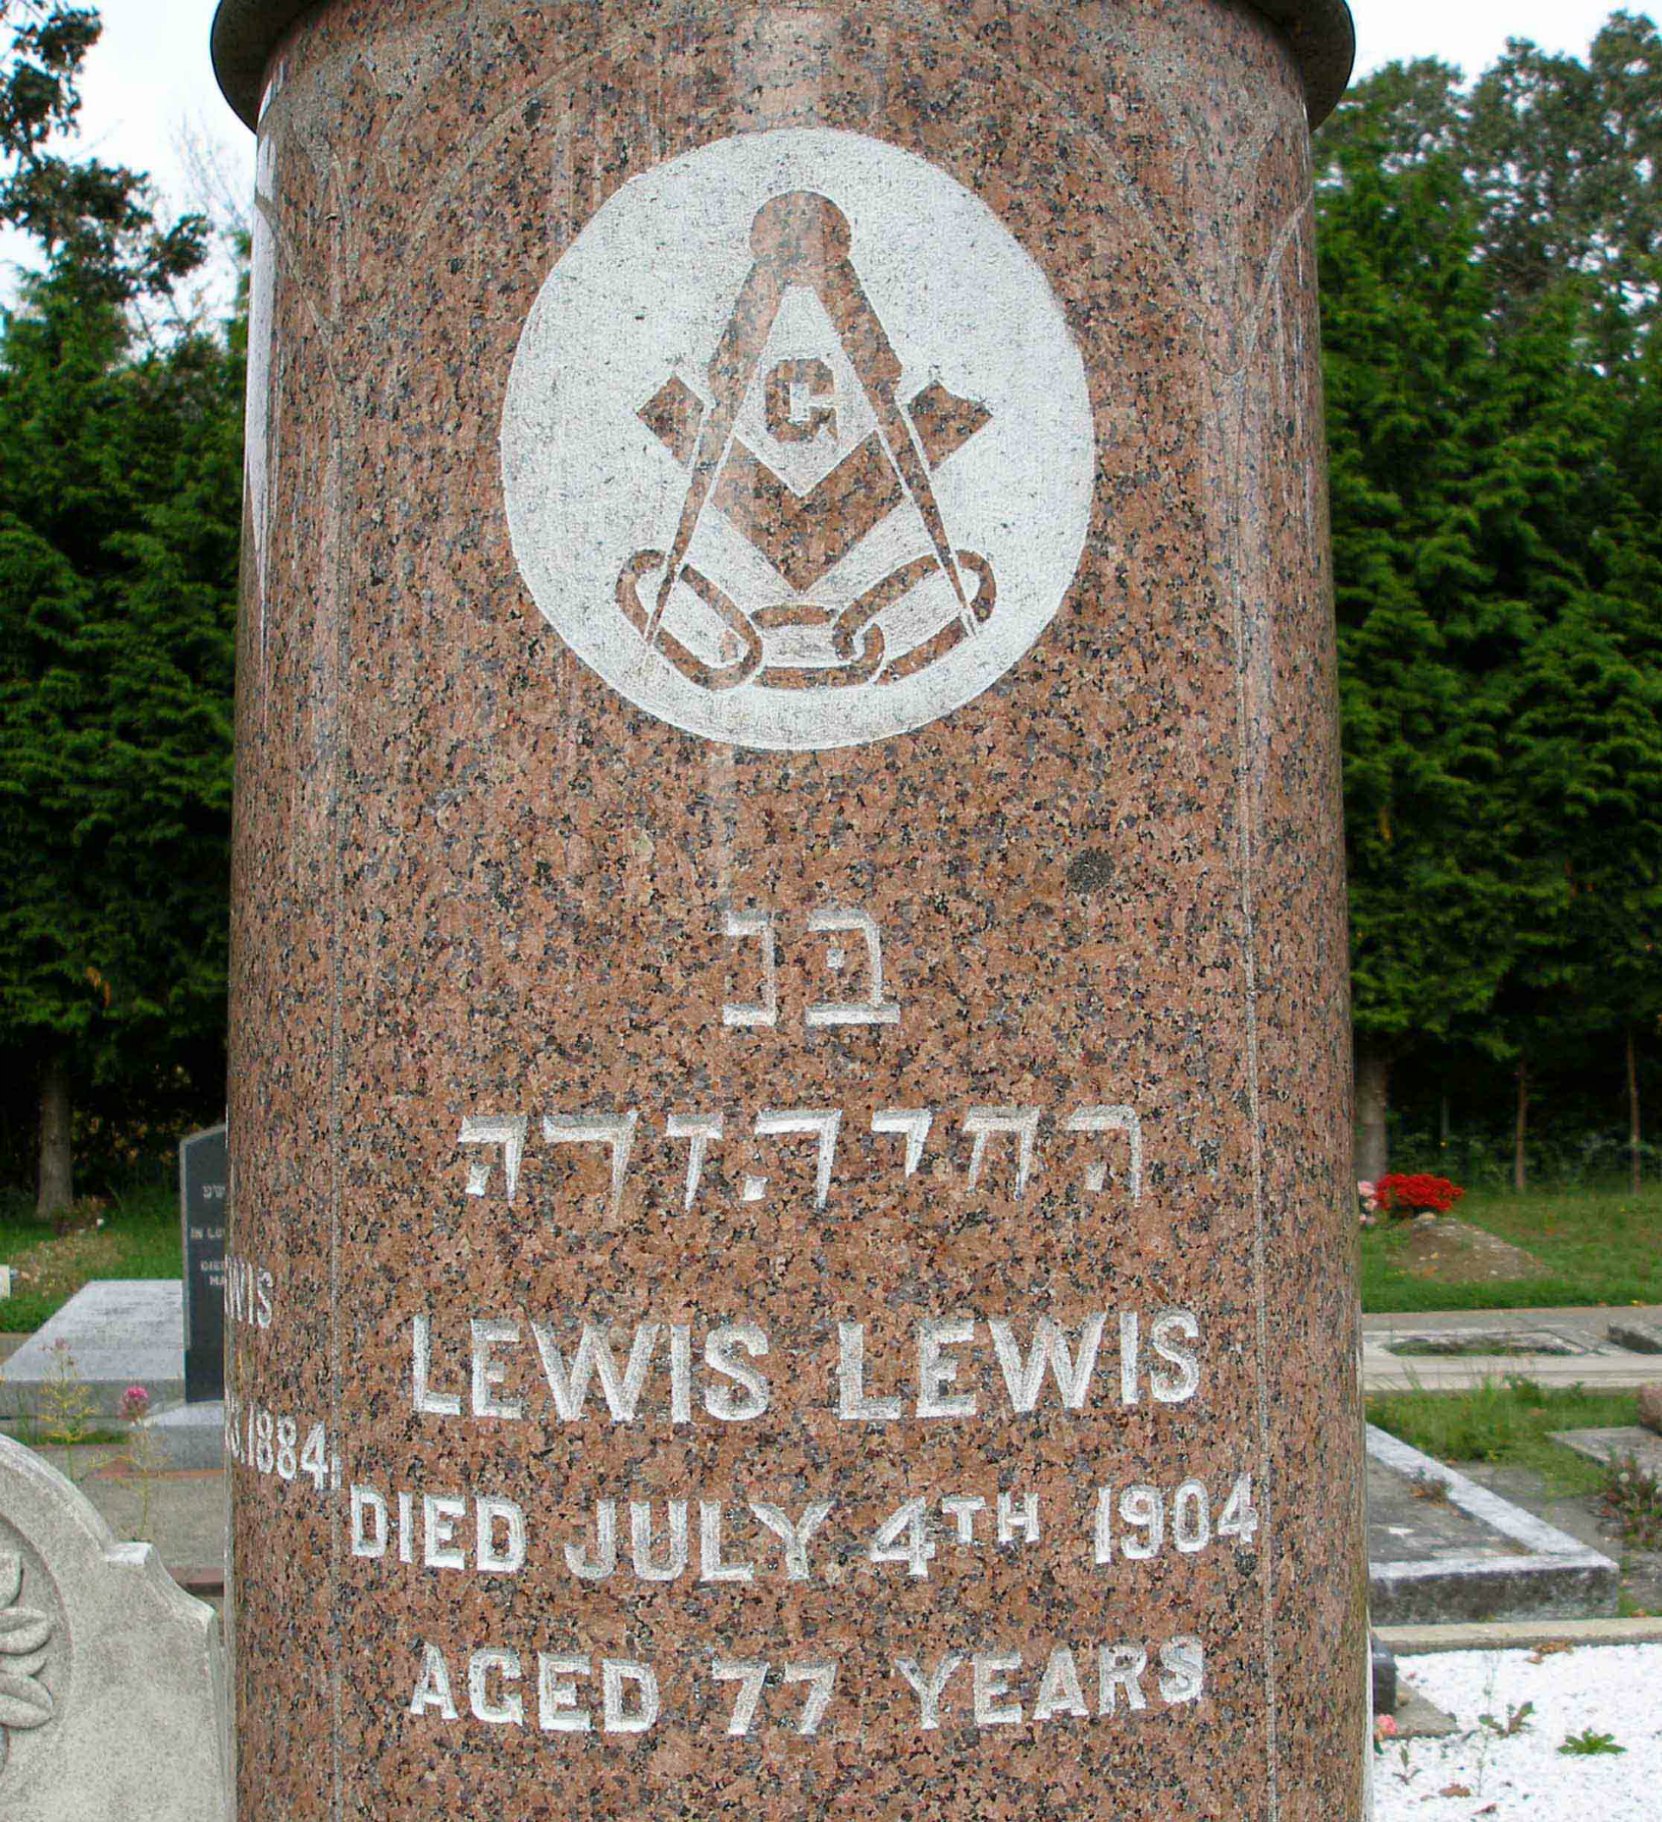 Inscription on Lewis Lewis grave, Victoria Jewish Cemetery, Victoria, B.C.